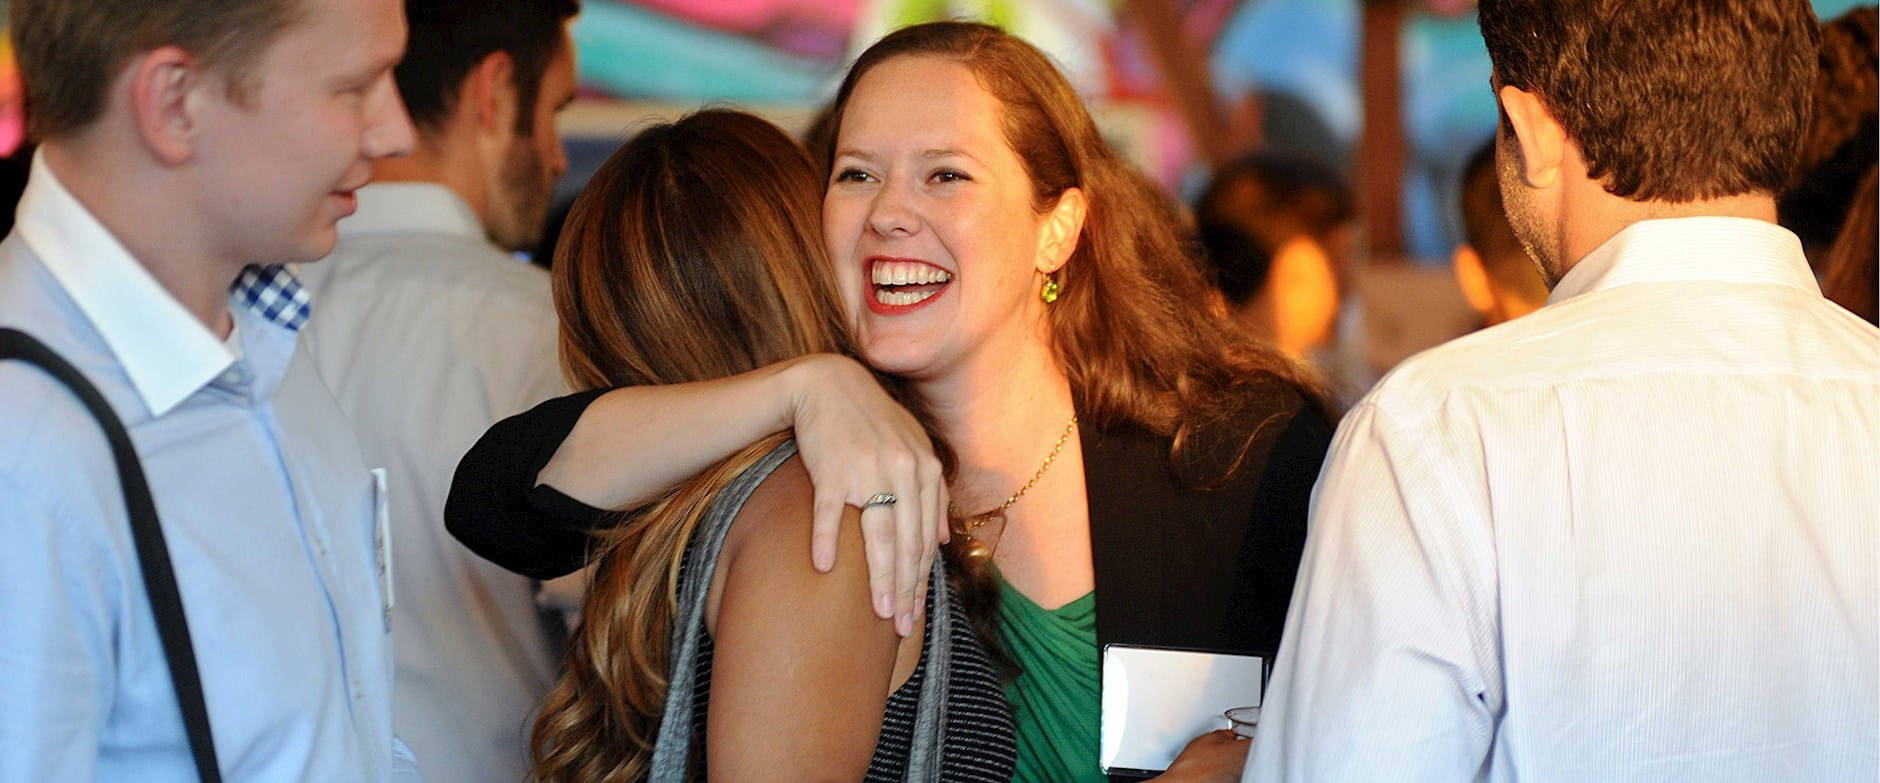 Women hugging at an event